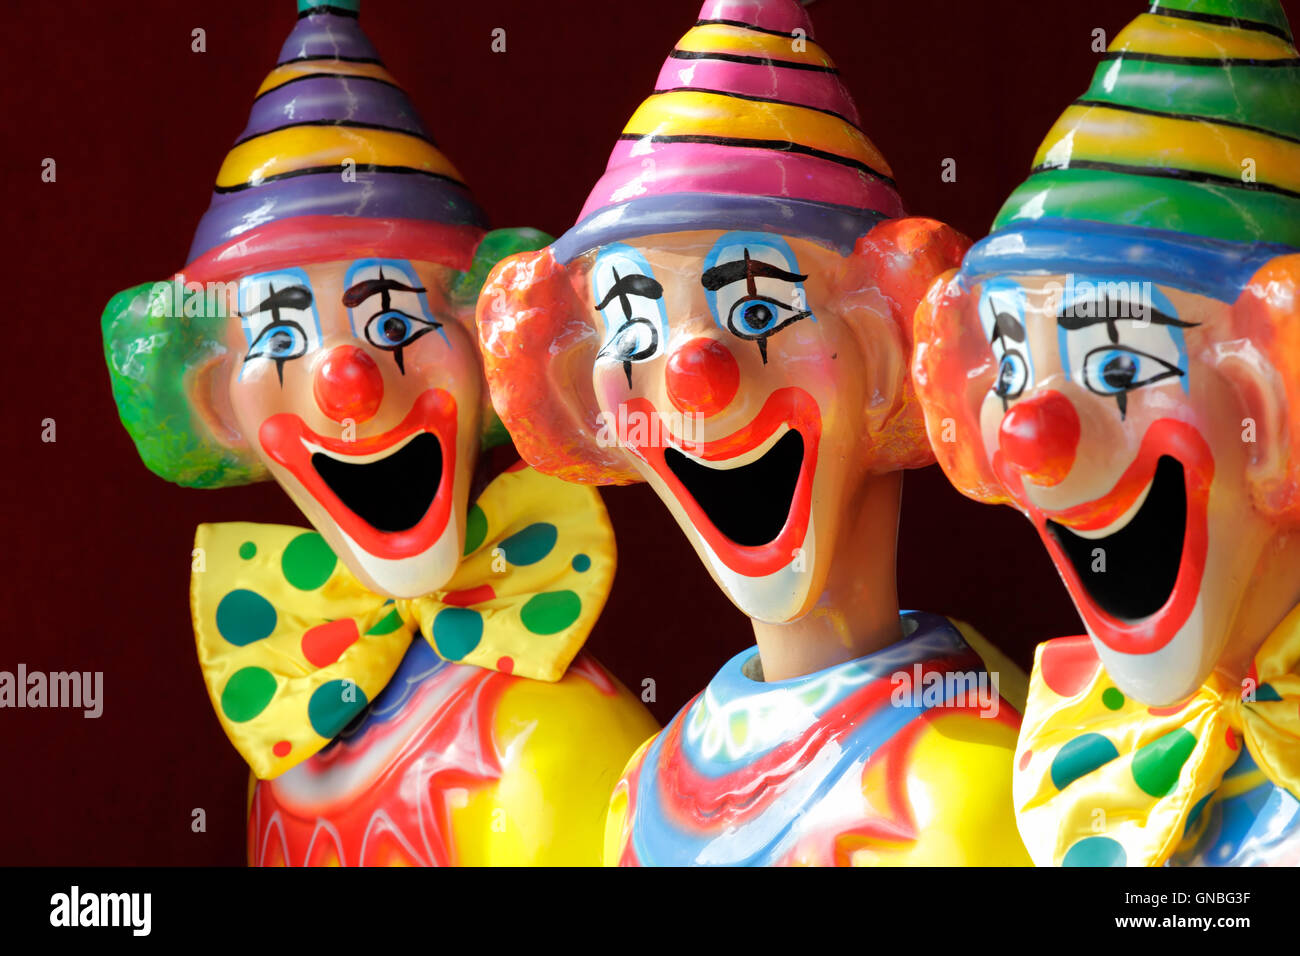 Payasos de carnaval fotografías e imágenes de alta resolución - Alamy